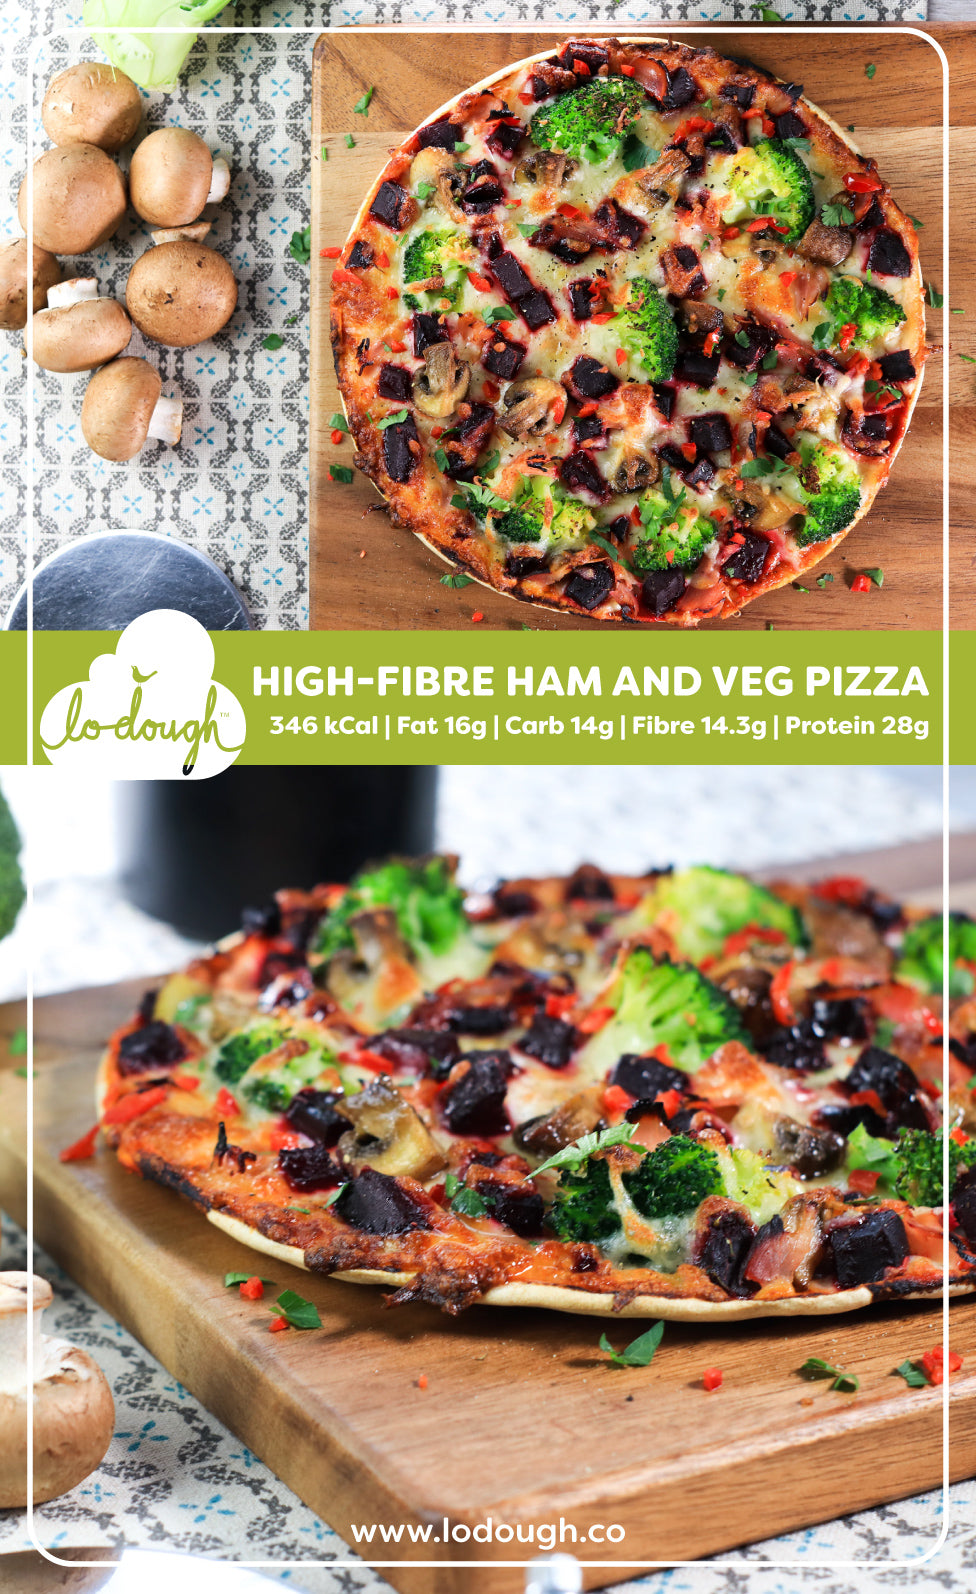 High-Fibre Ham and Veg Pizza